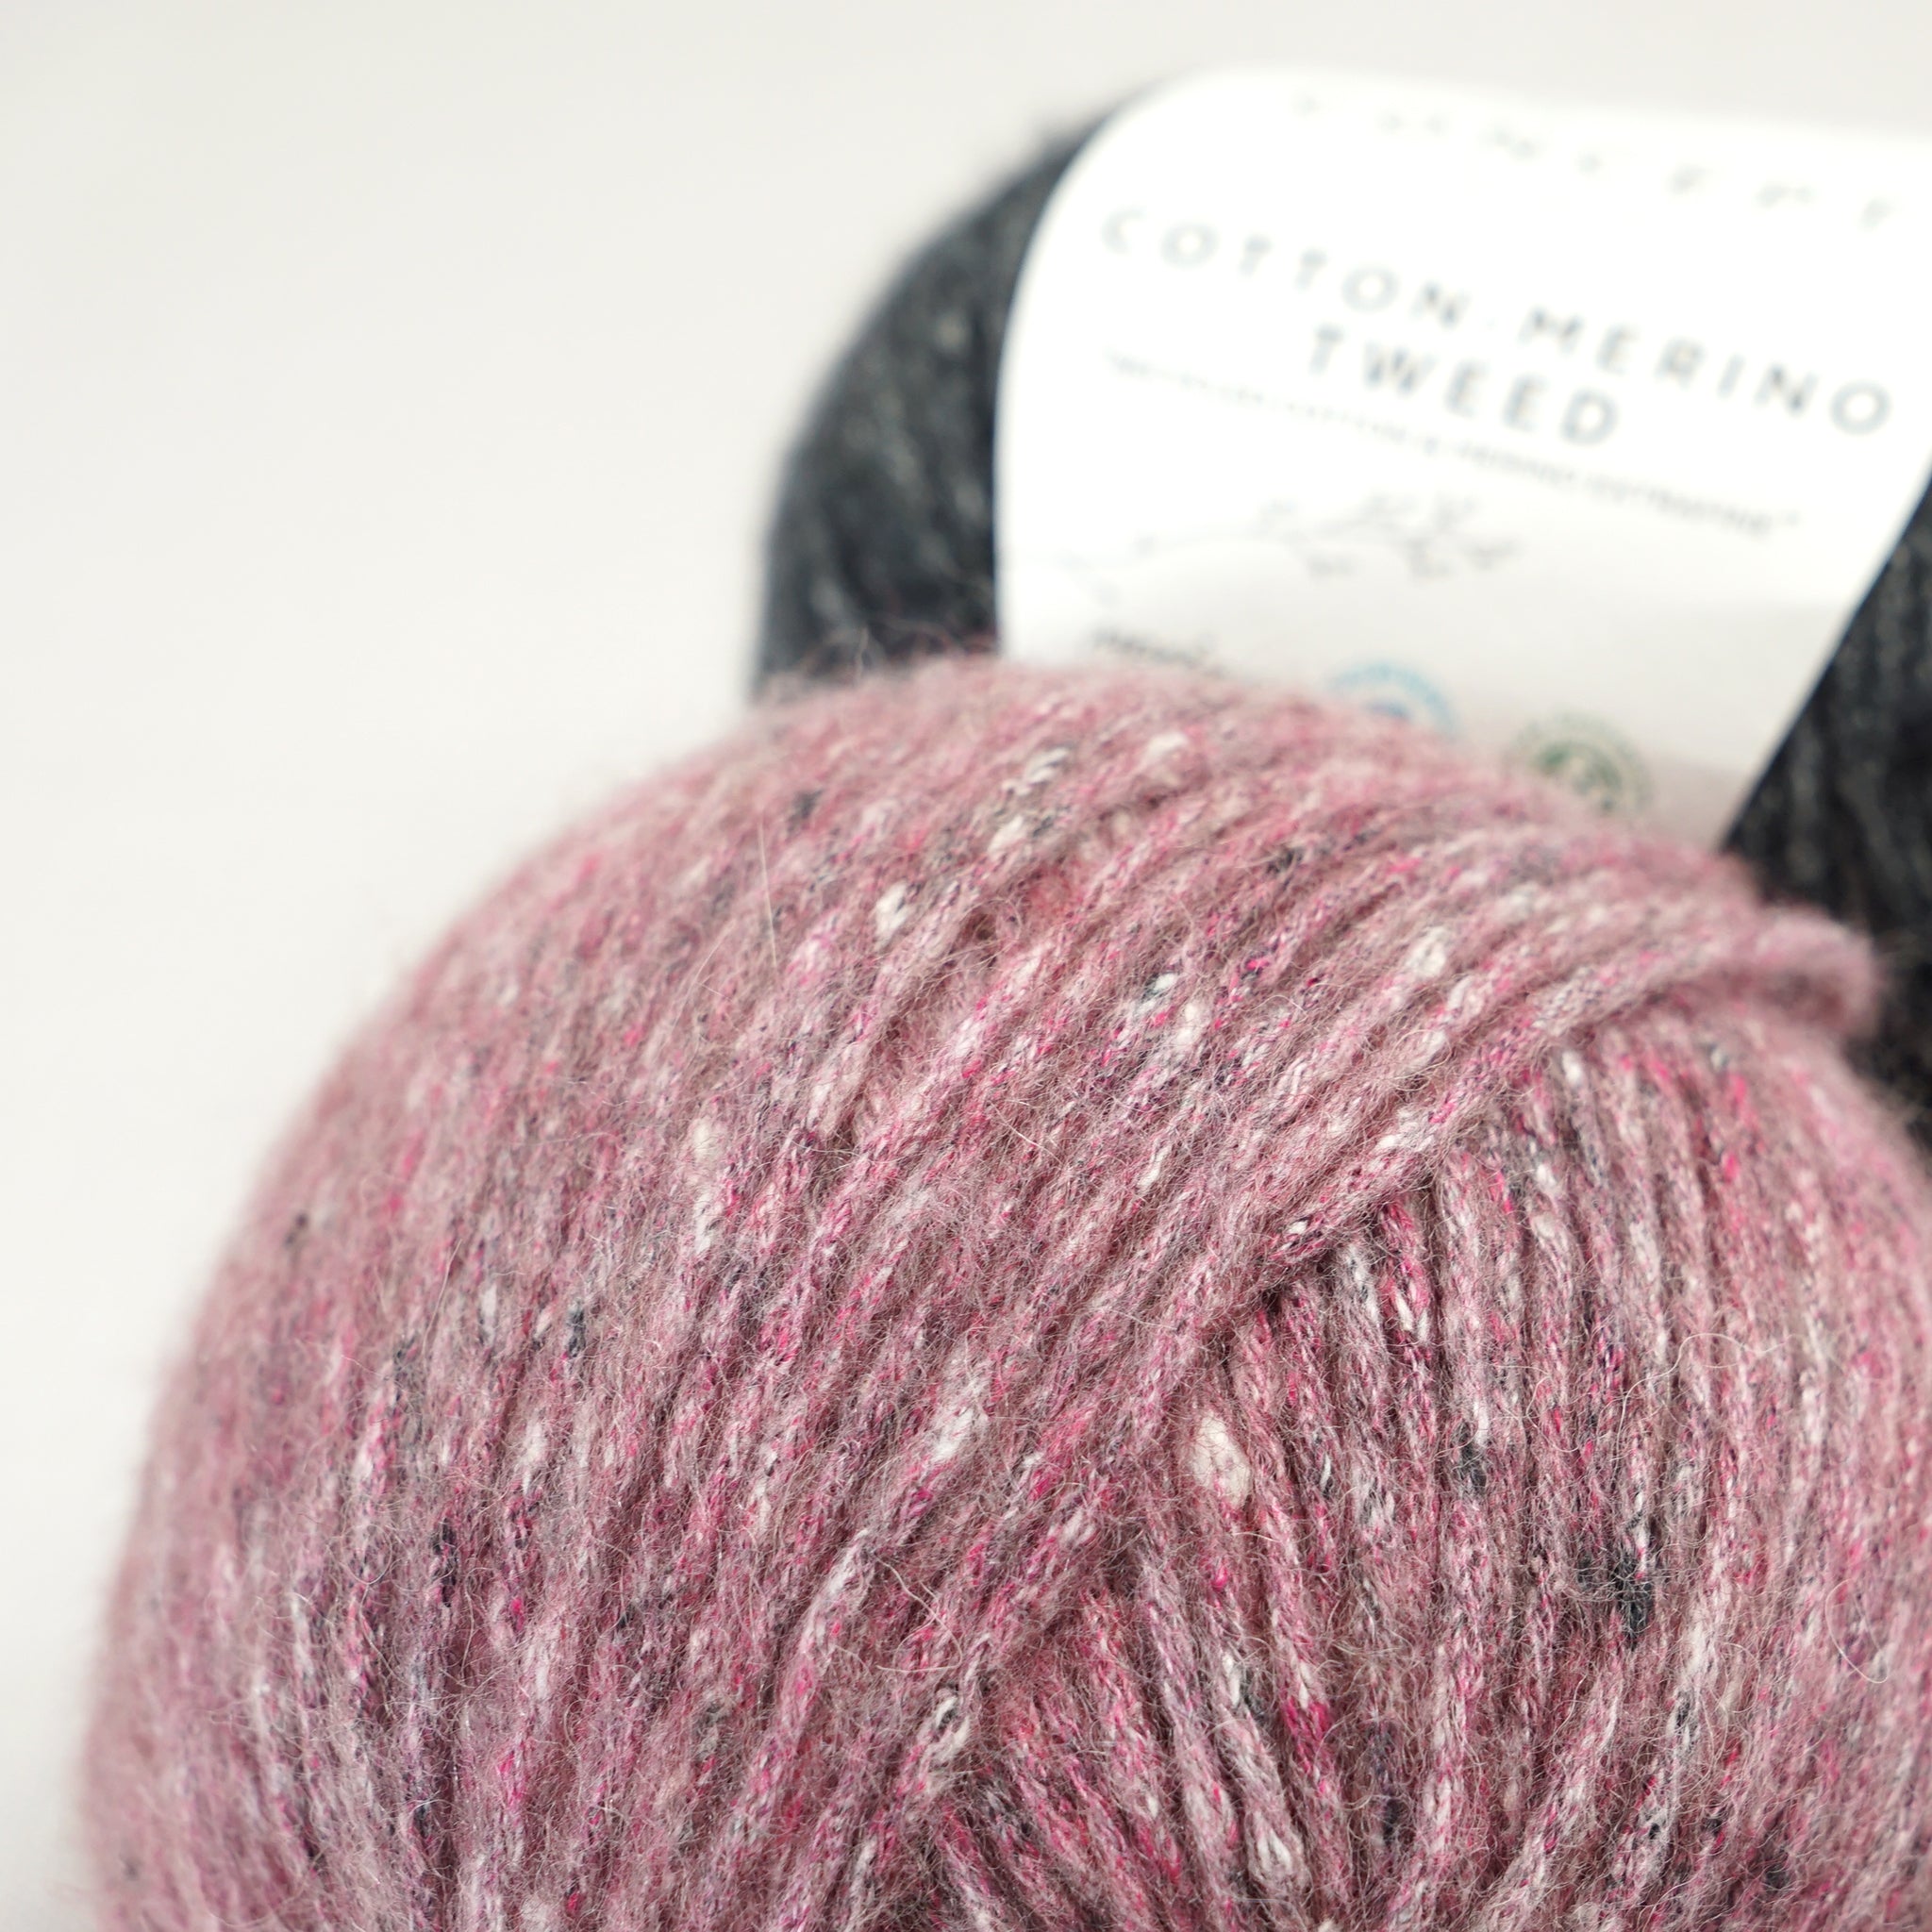 Cotton Merino Tweed*